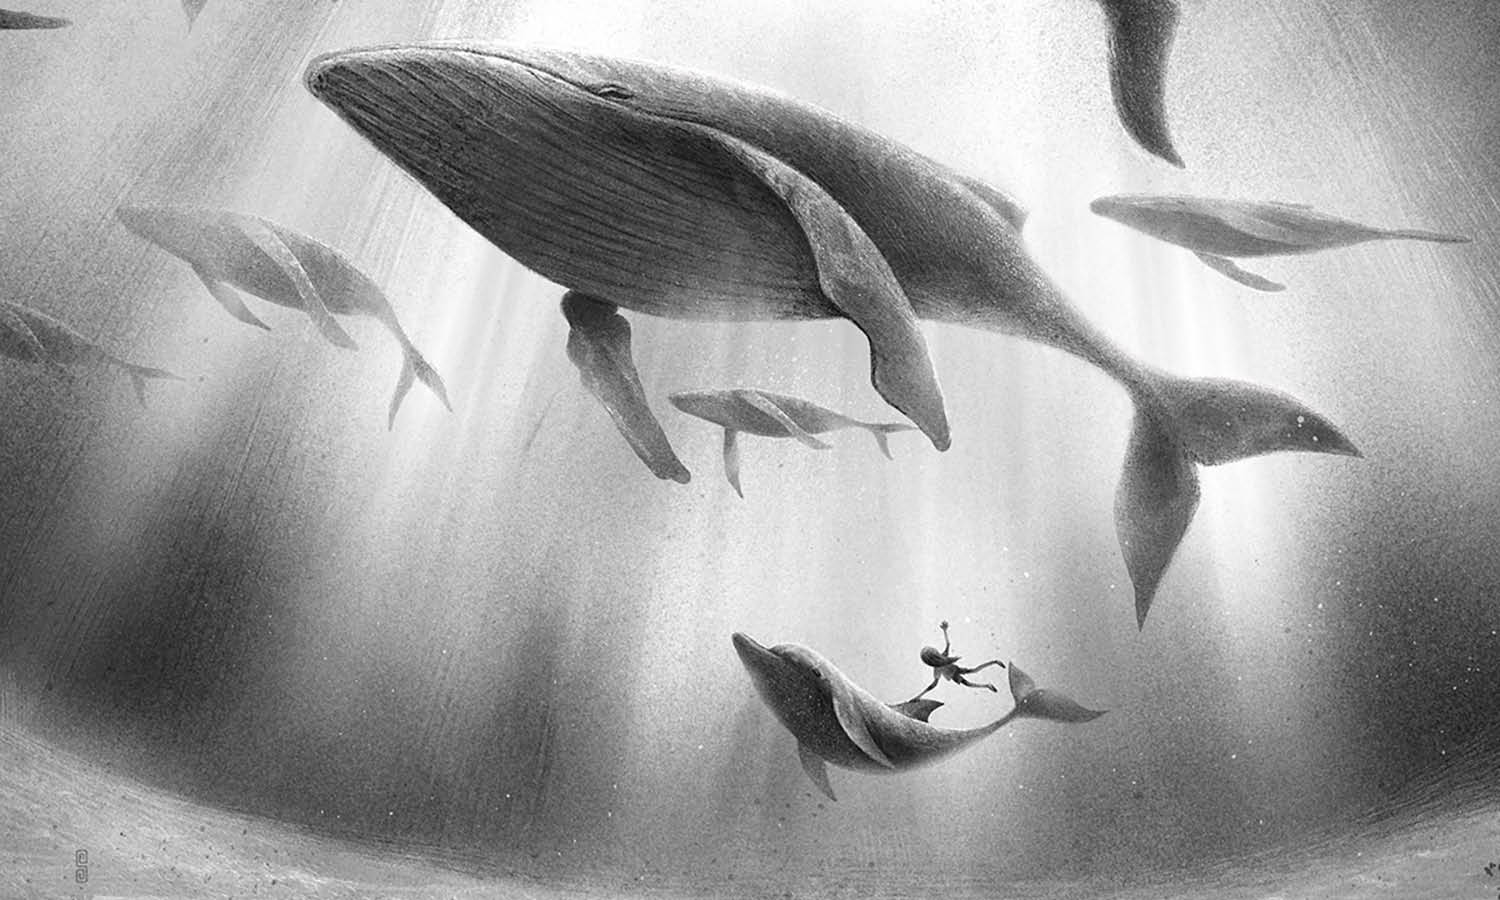 30 Best Ocean Illustration Ideas You Should Check